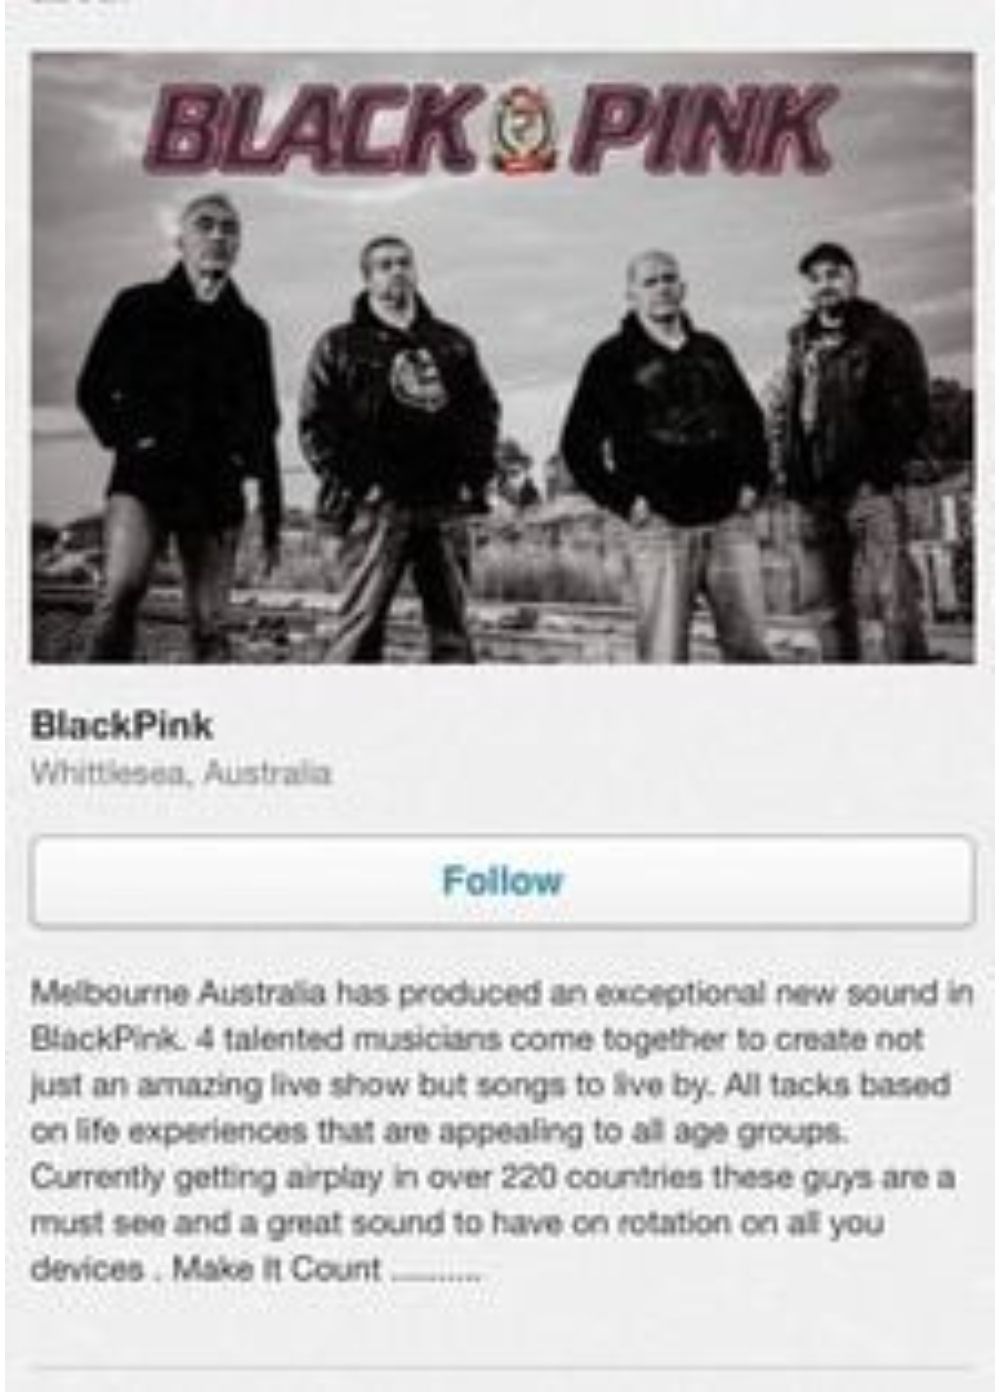 BLACKPINK, boyband Australia./KBIZoom